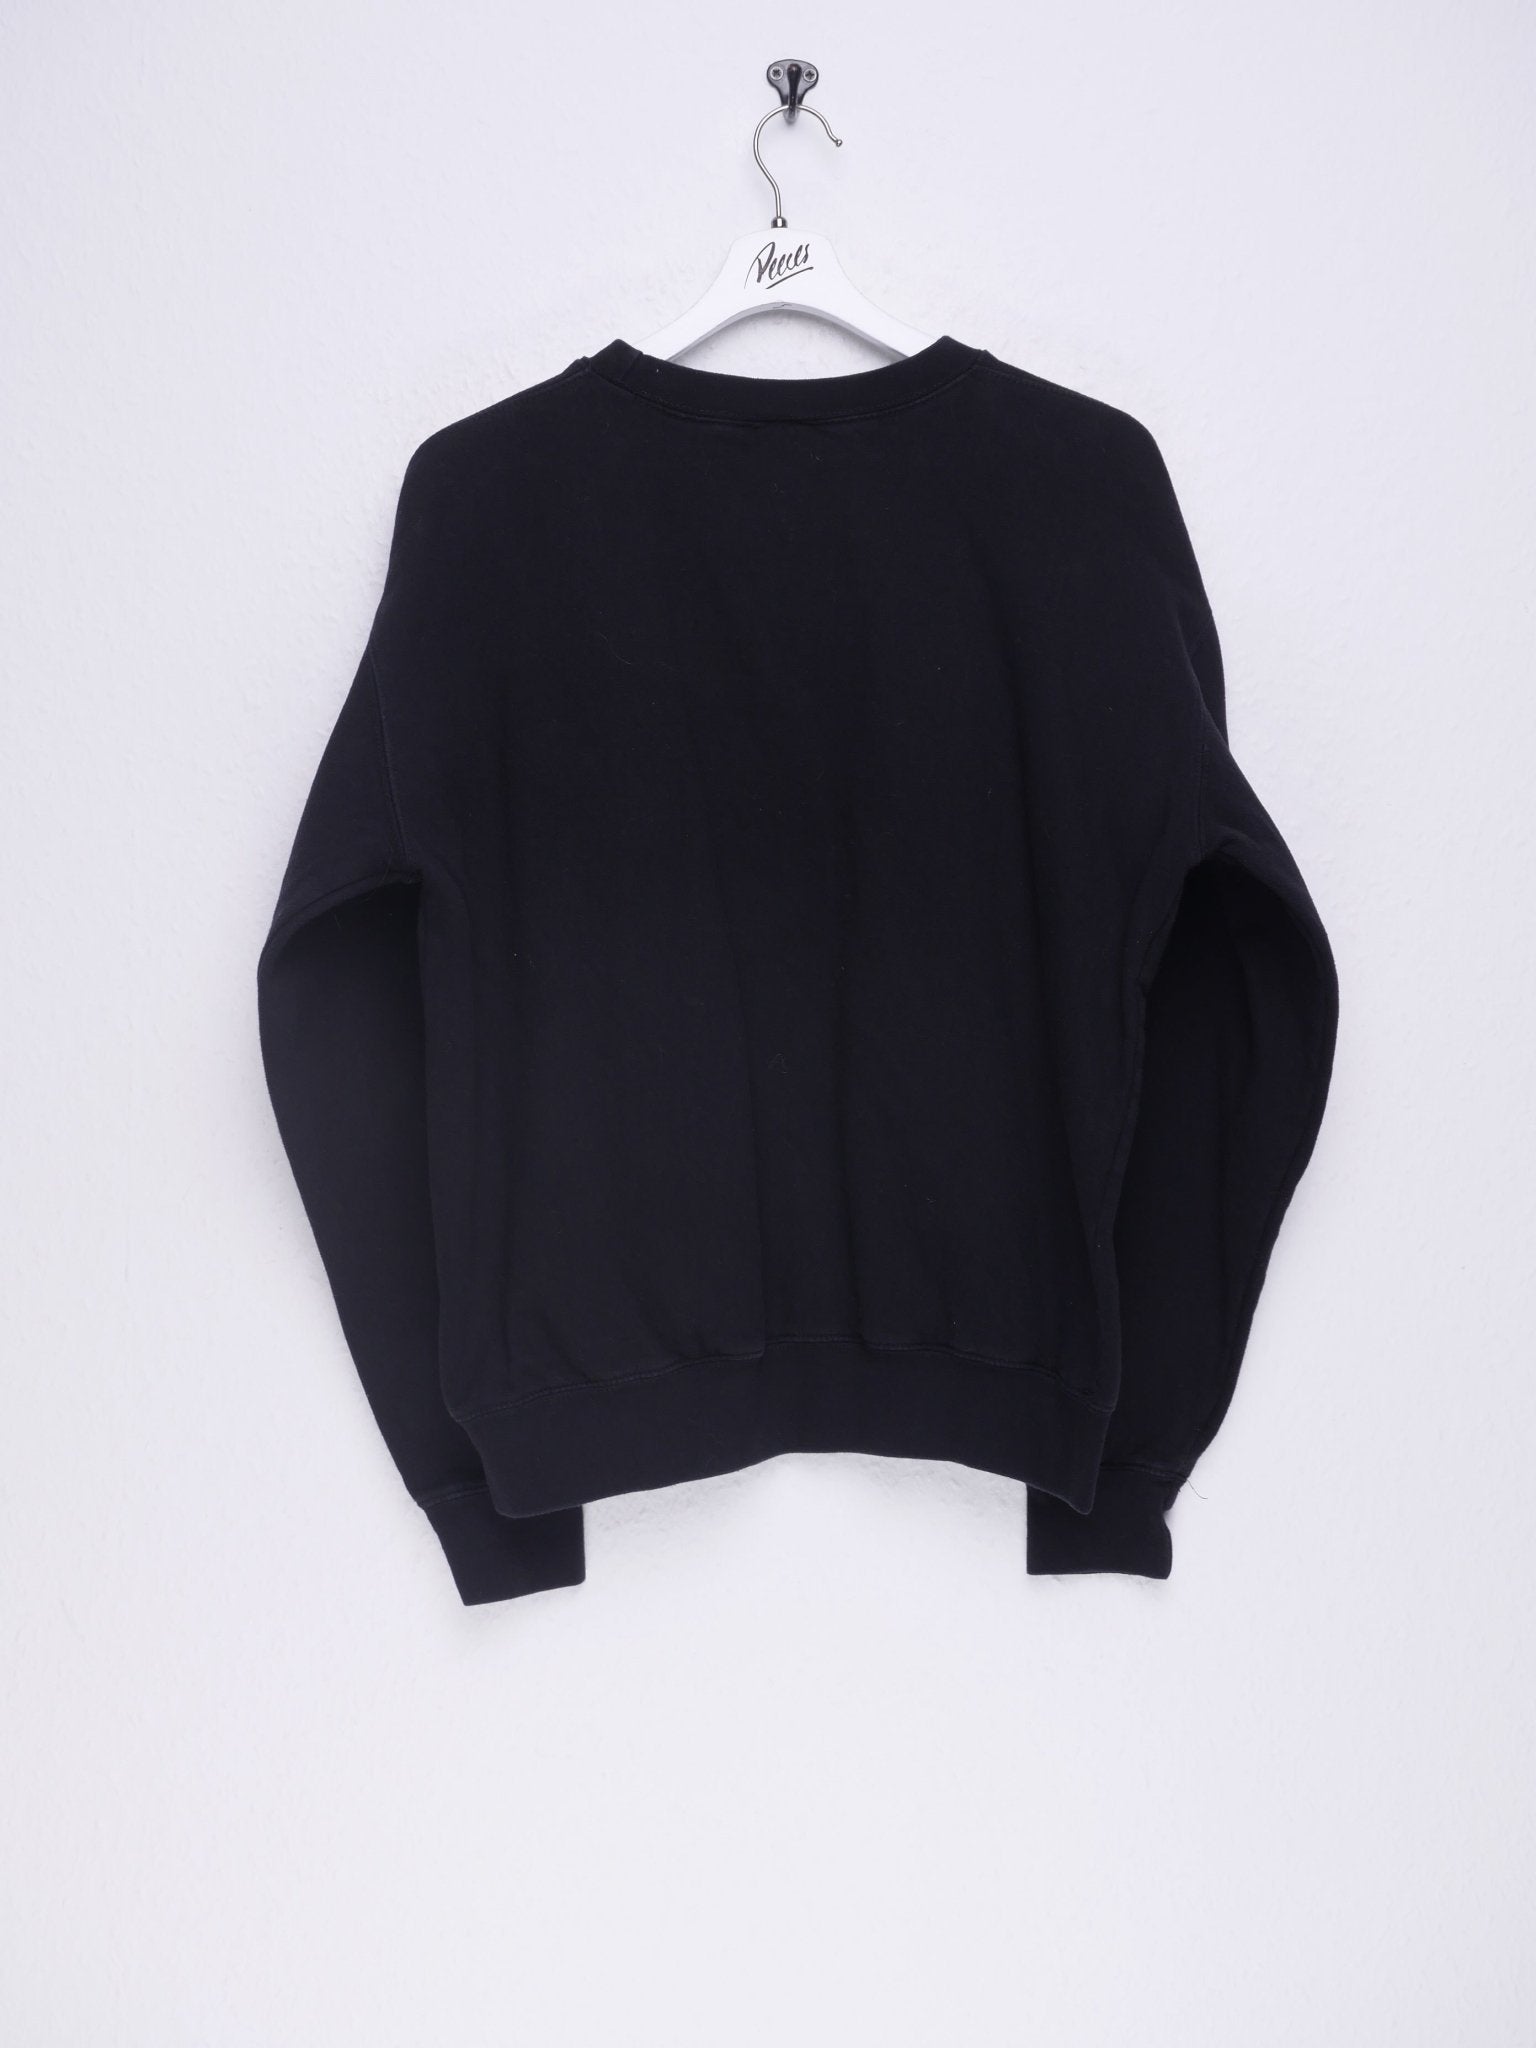 Adidas pinted Big Logo black Sweater - Peeces